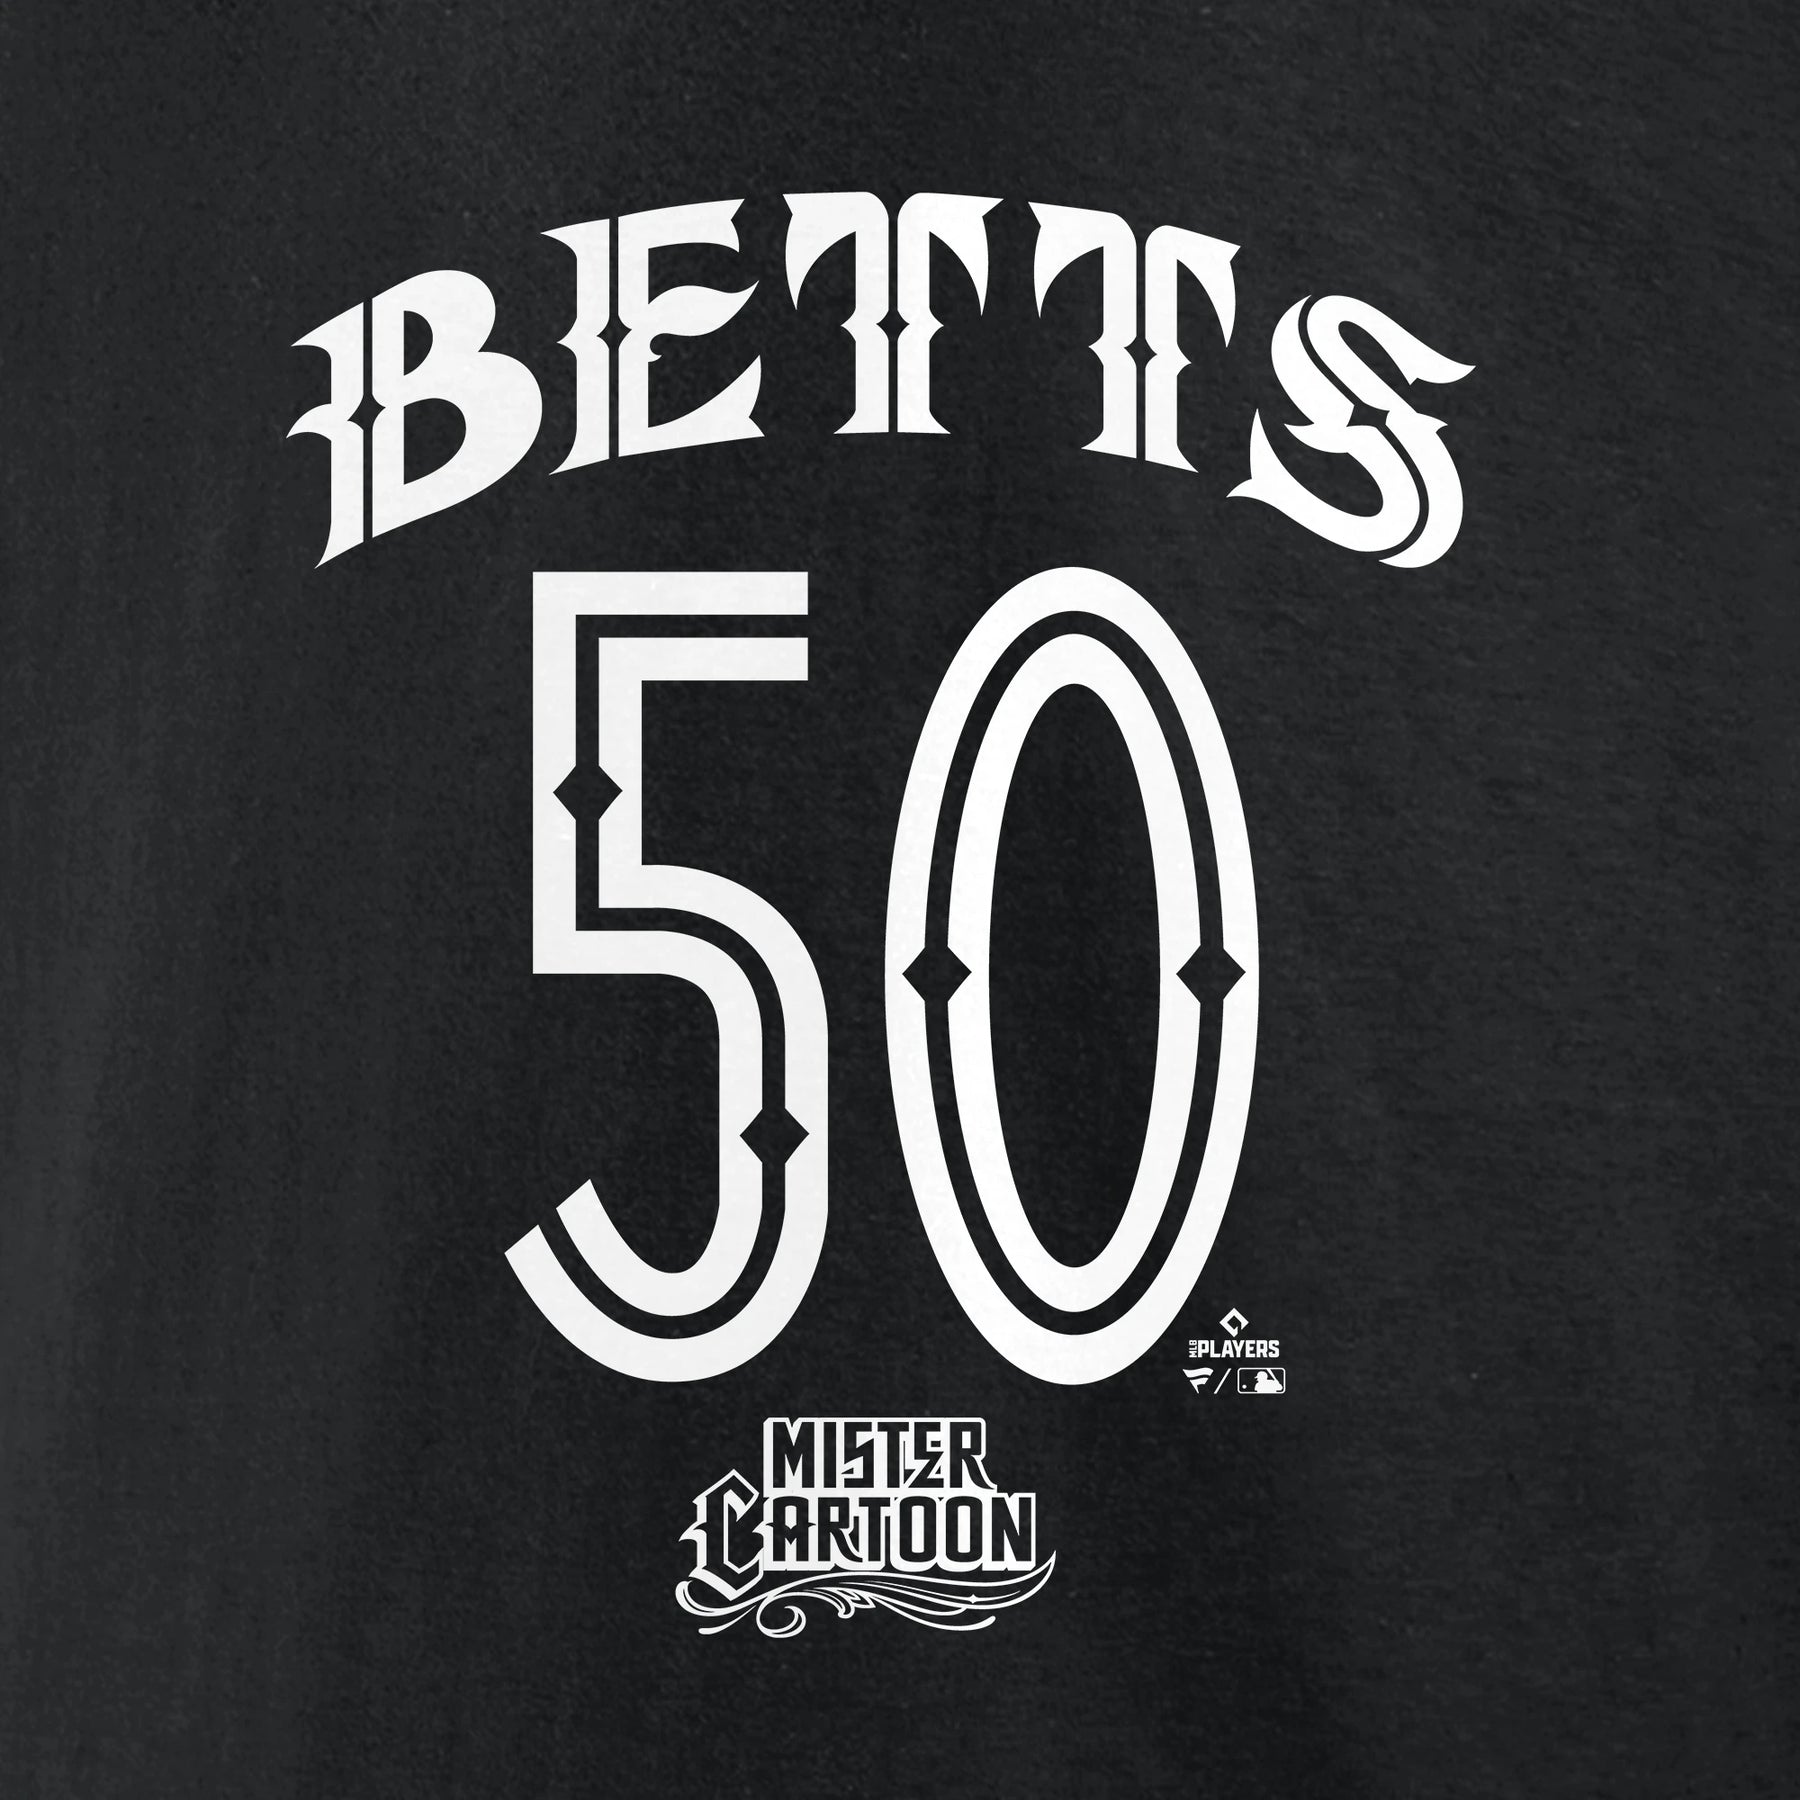 DODGERS Mookie Betts #50 T shirt Black